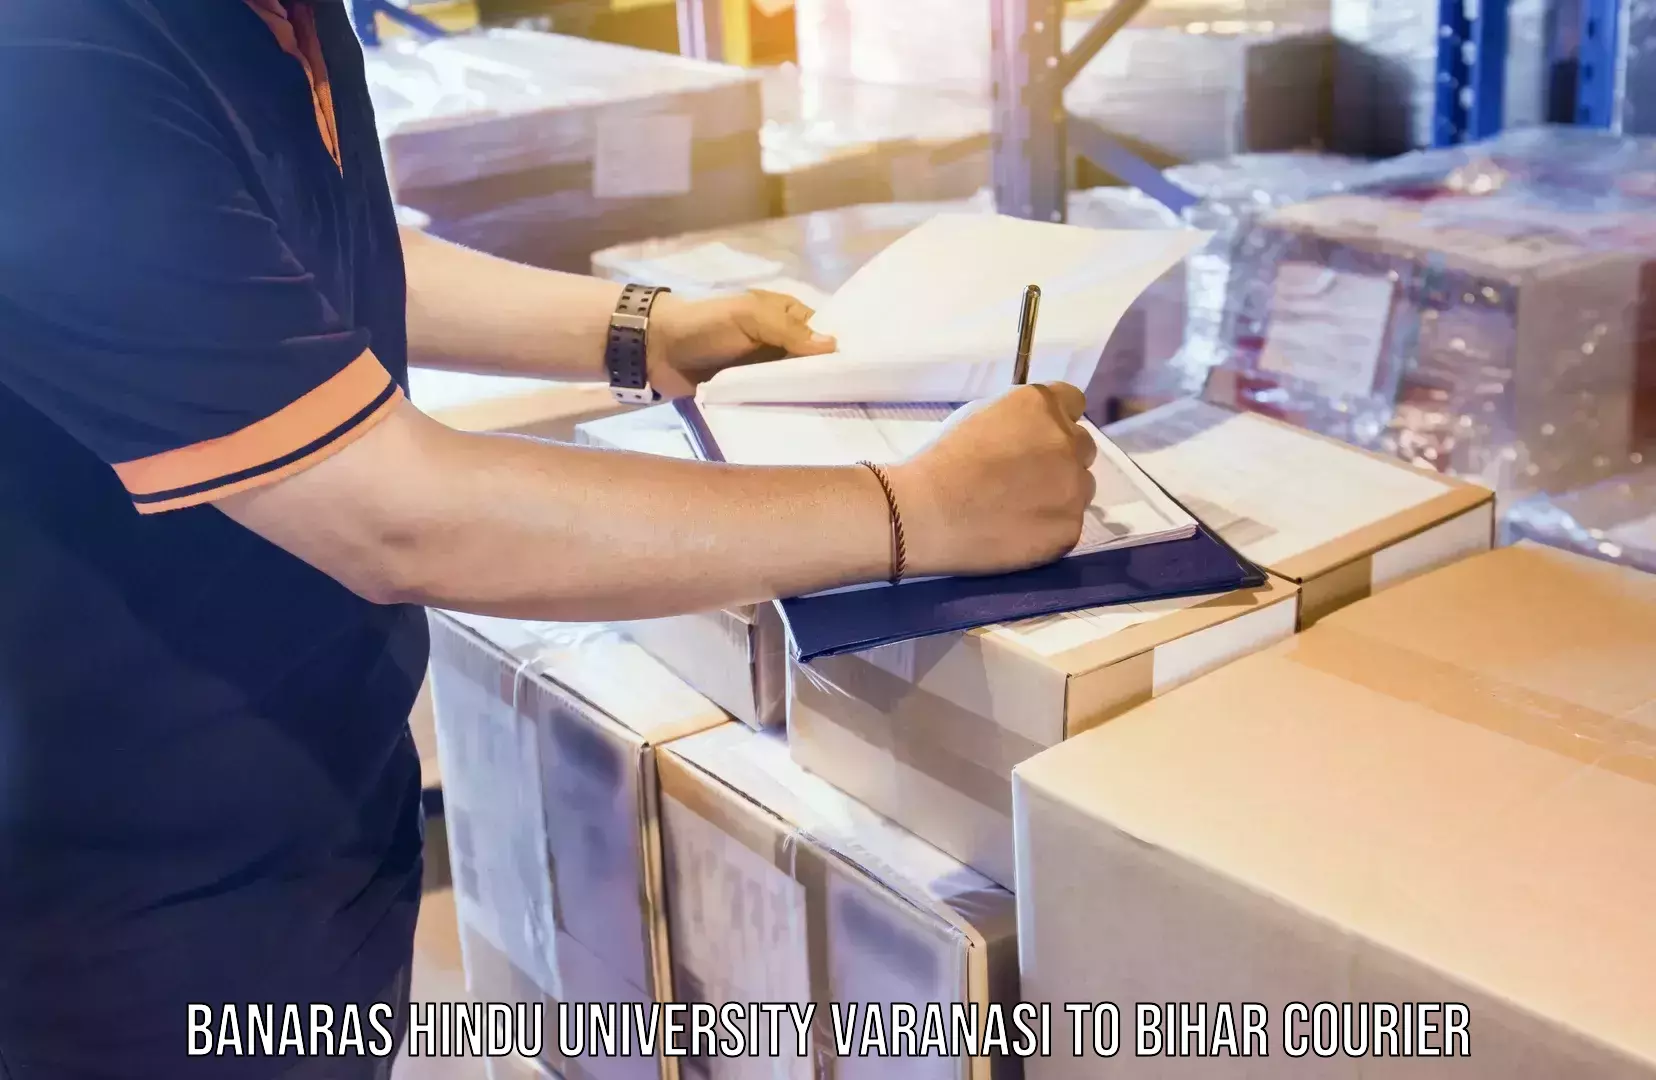 Small business couriers Banaras Hindu University Varanasi to Bihar